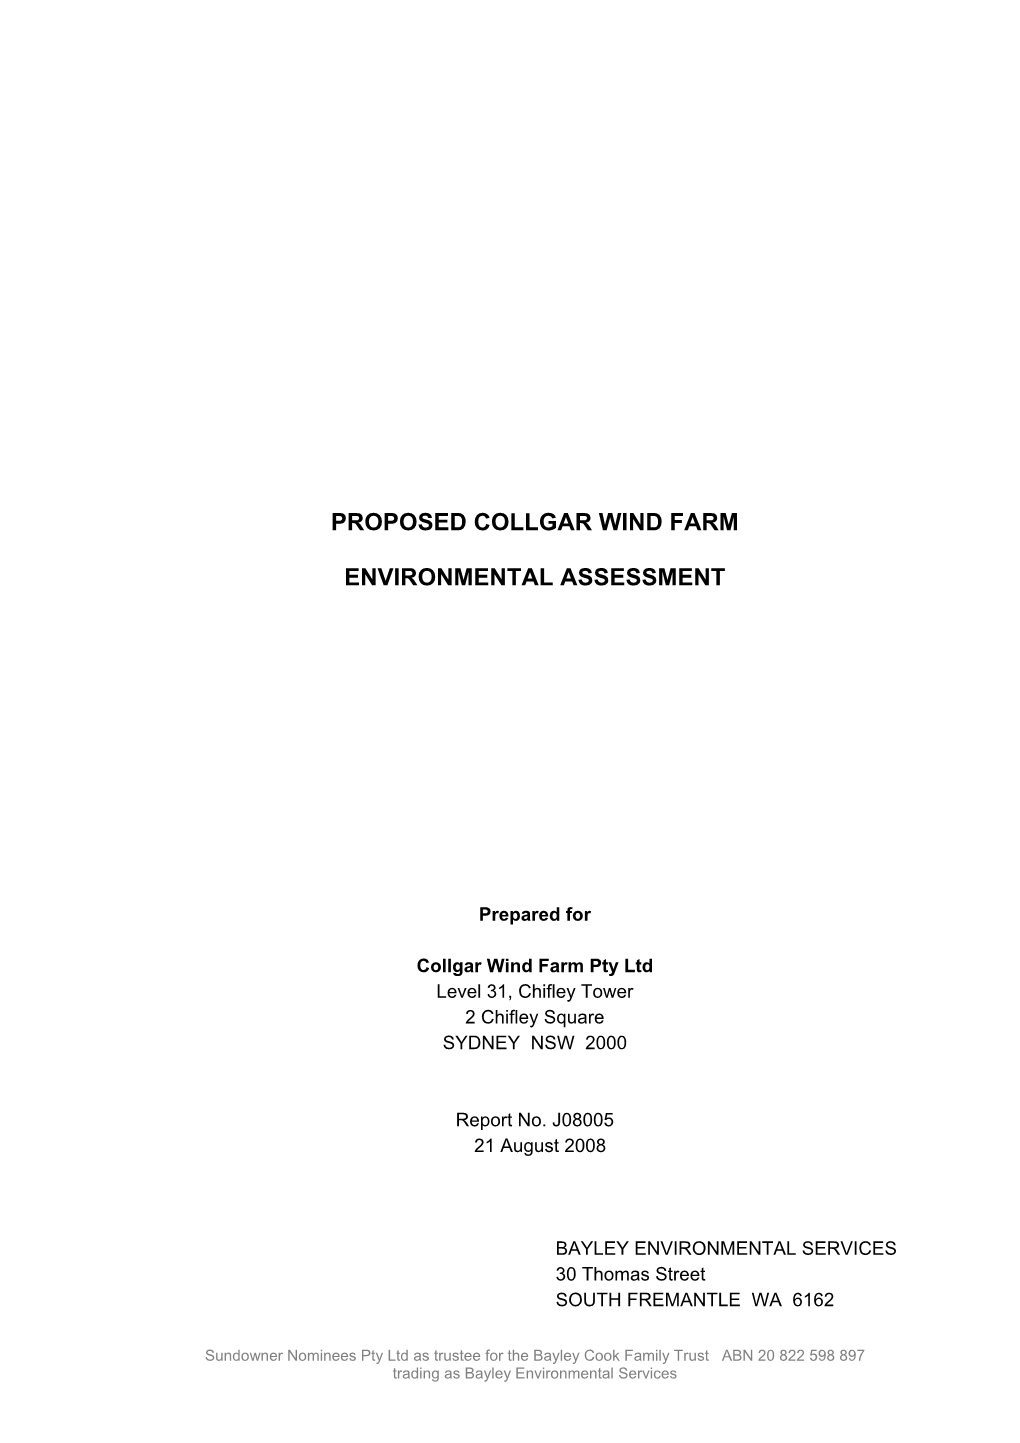 Proposed Collgar Wind Farm Environmental Assessment